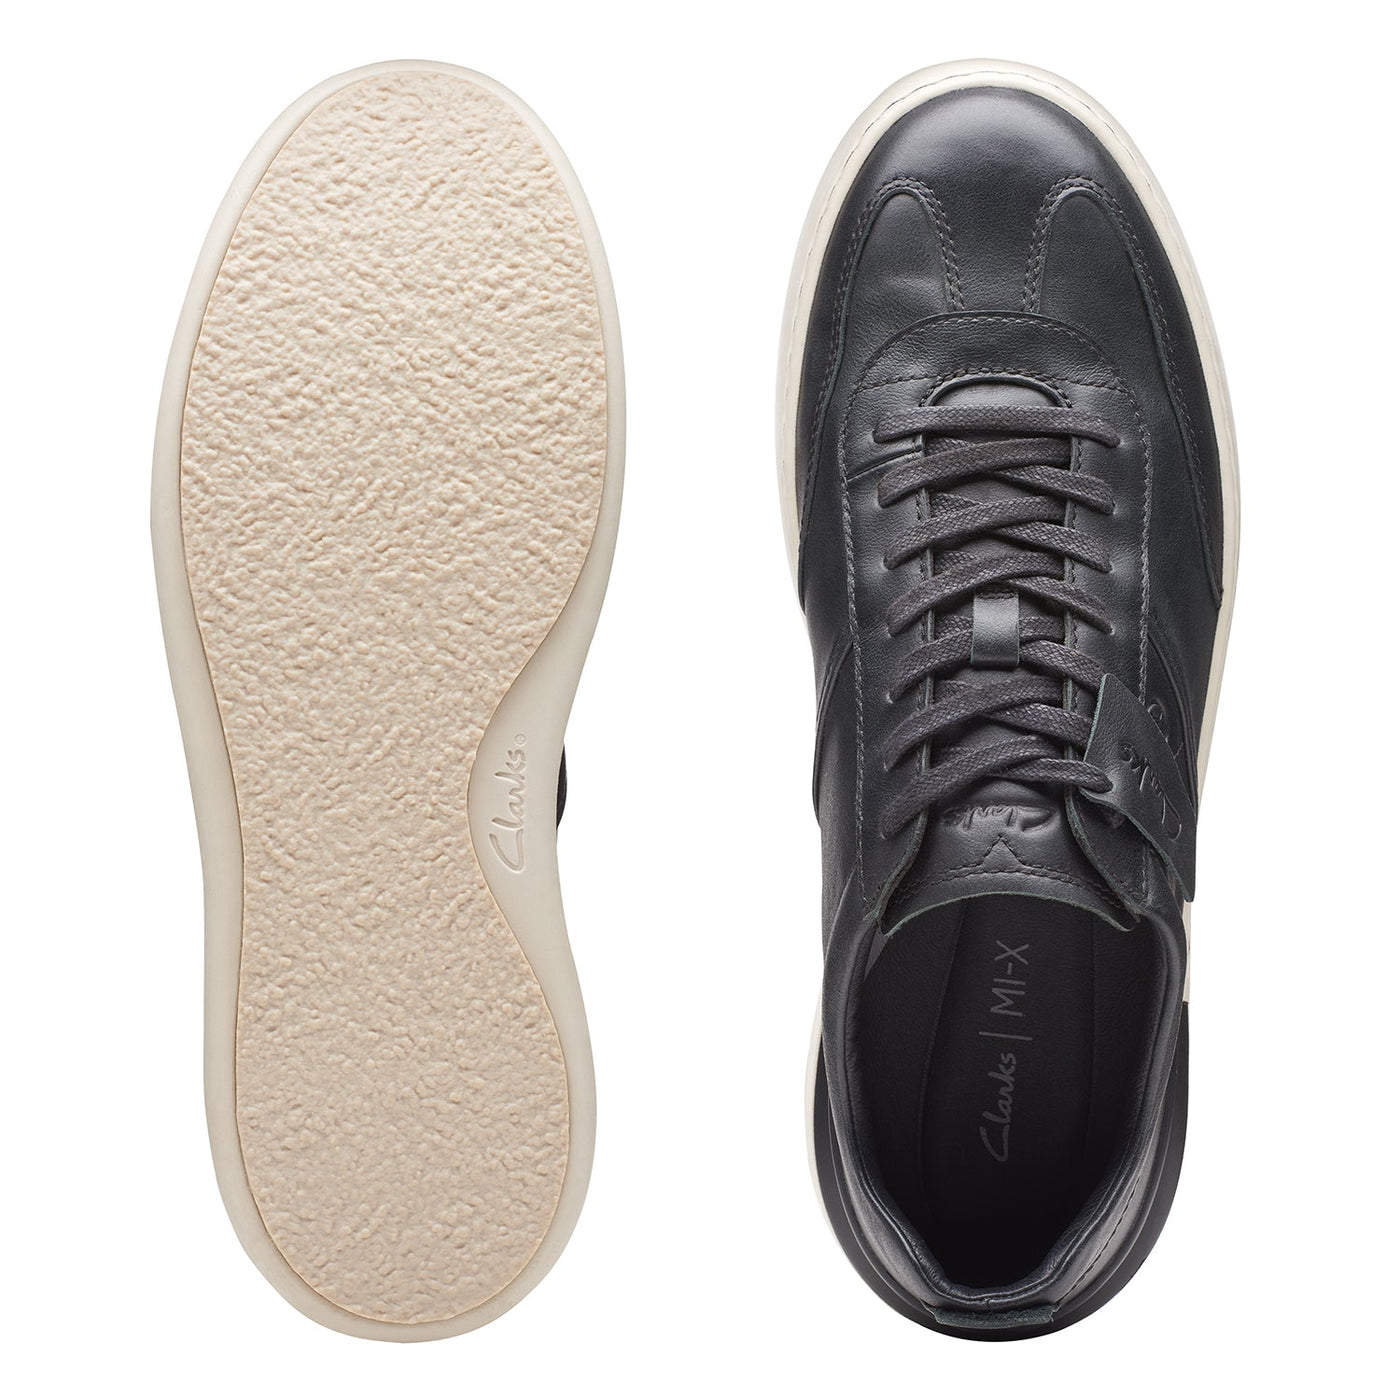 Mens - Court Lite Mode Black Leather